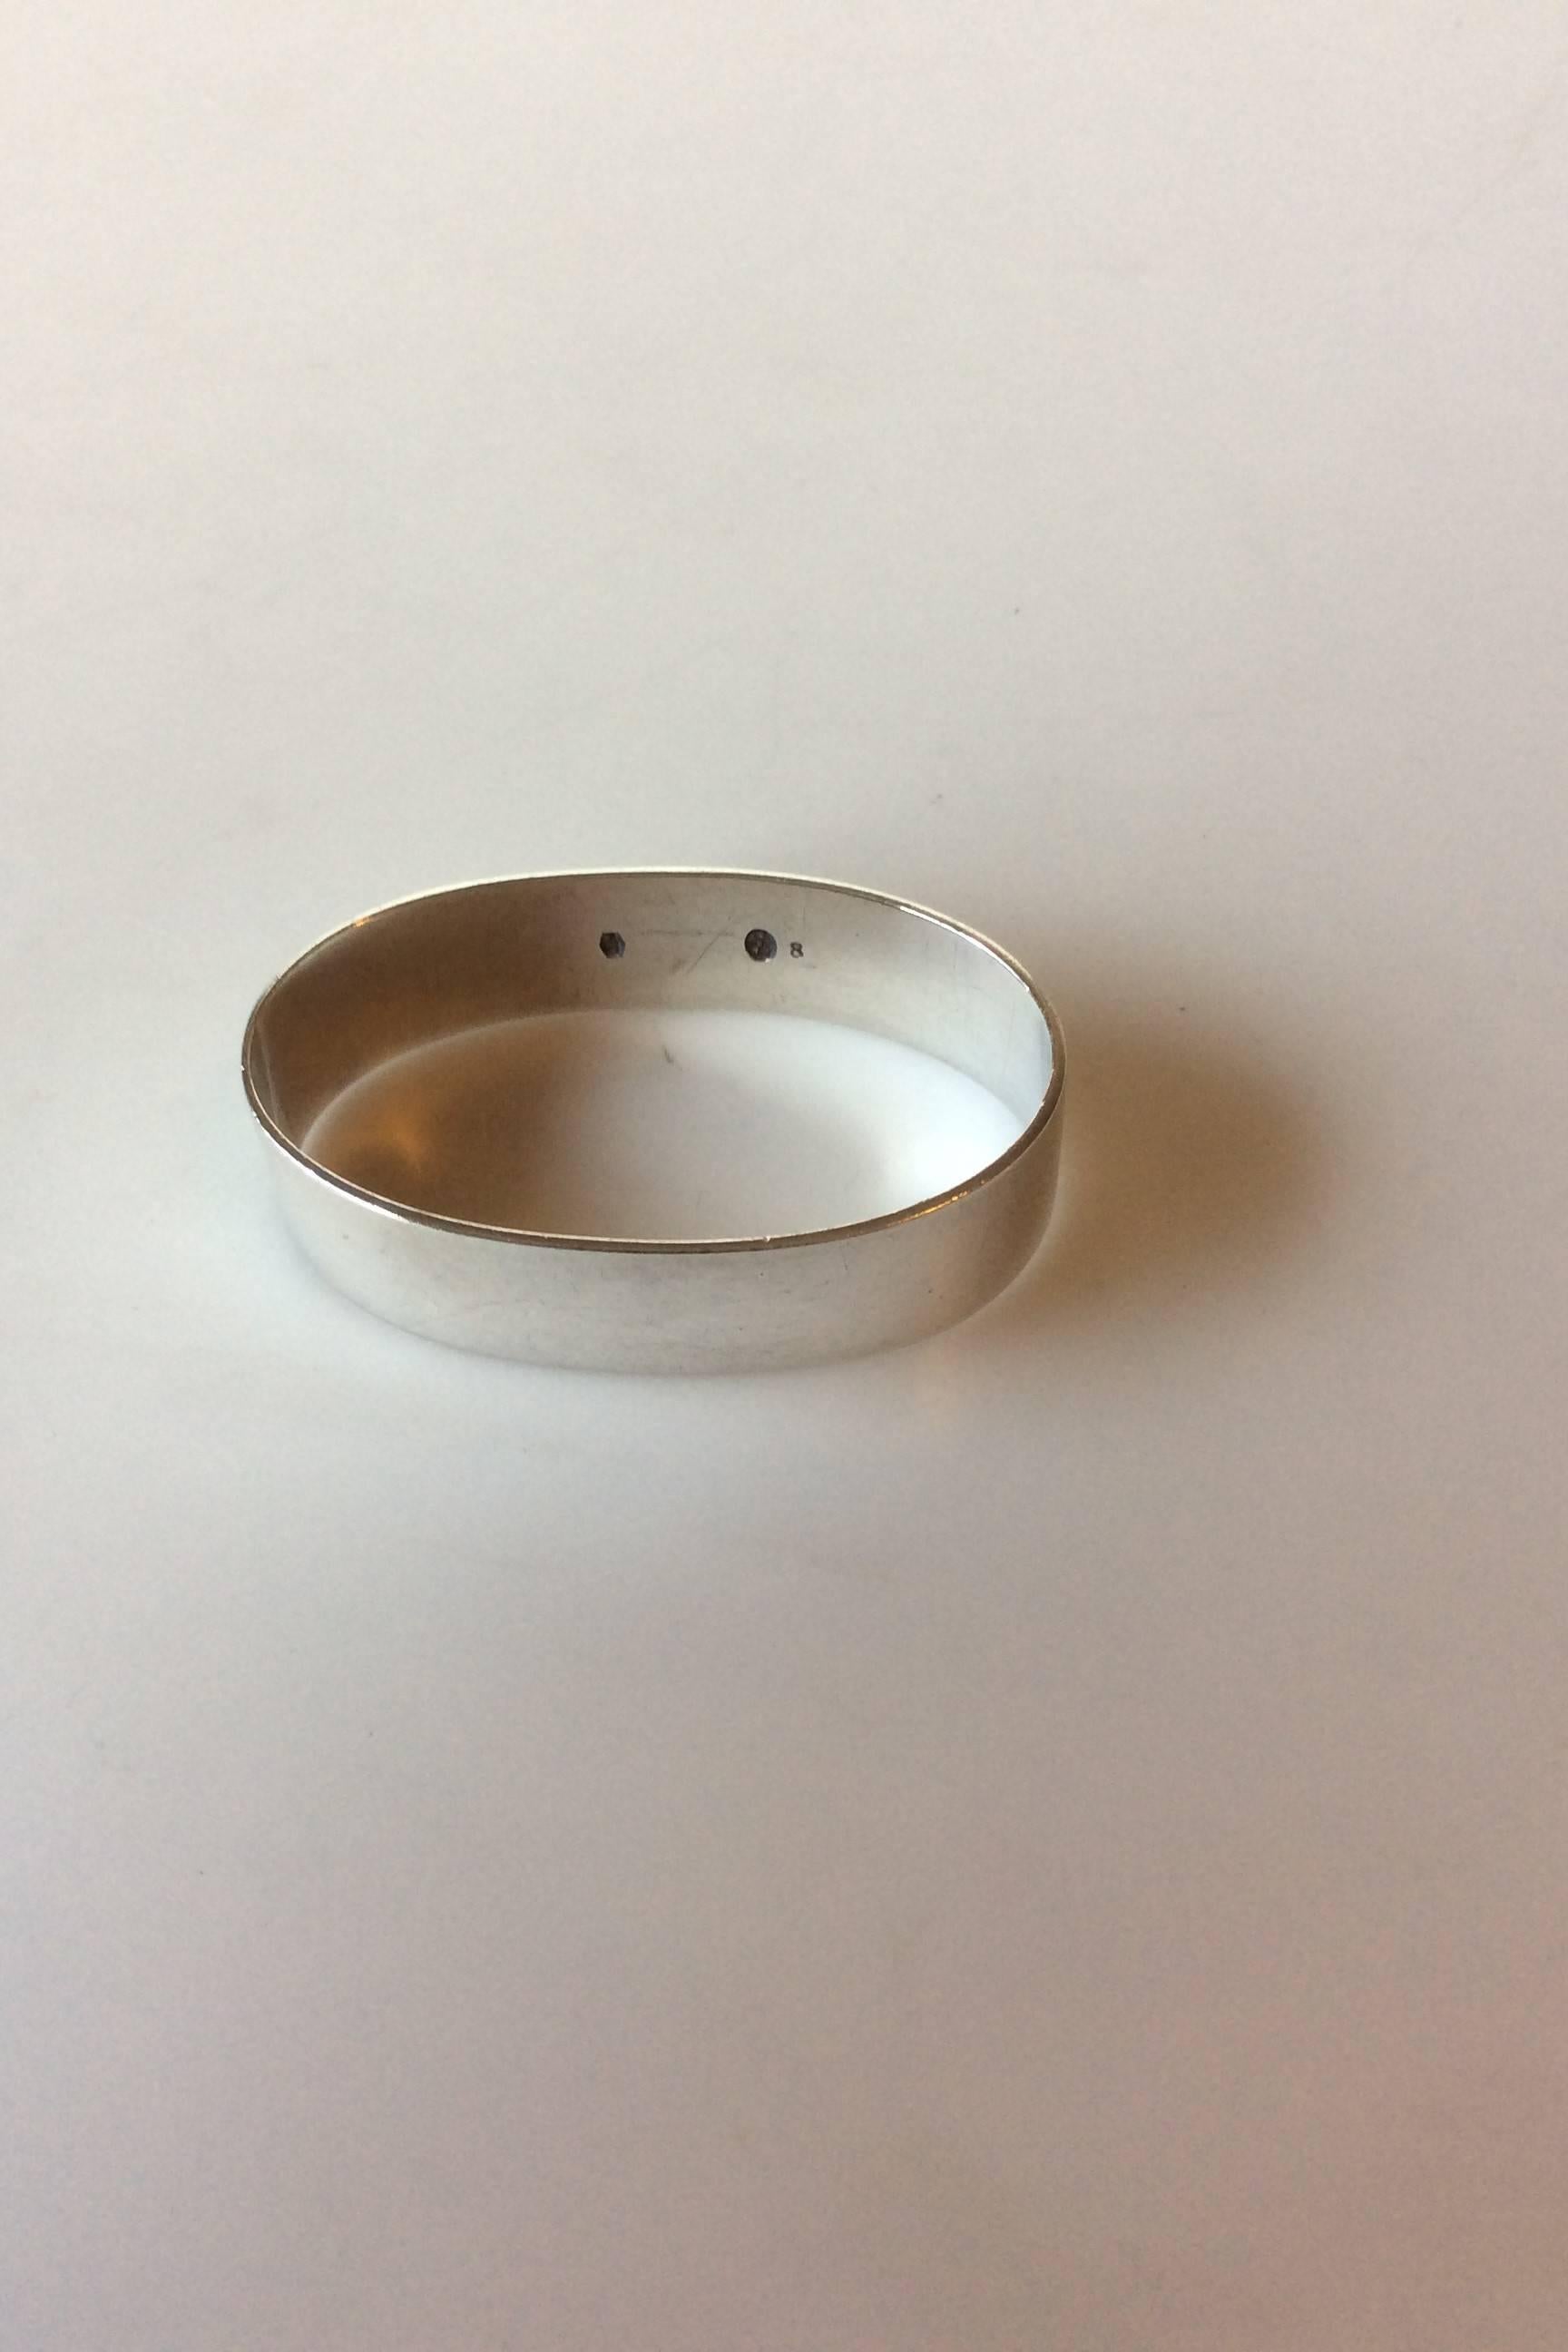 Silver napkin ring with freemason symbol, 830 S, DG, No 8. Measures: 5.3 x 3.4 x 1.4 cm / 2 3/32 x 1 11/32 x 0 35/64 in.